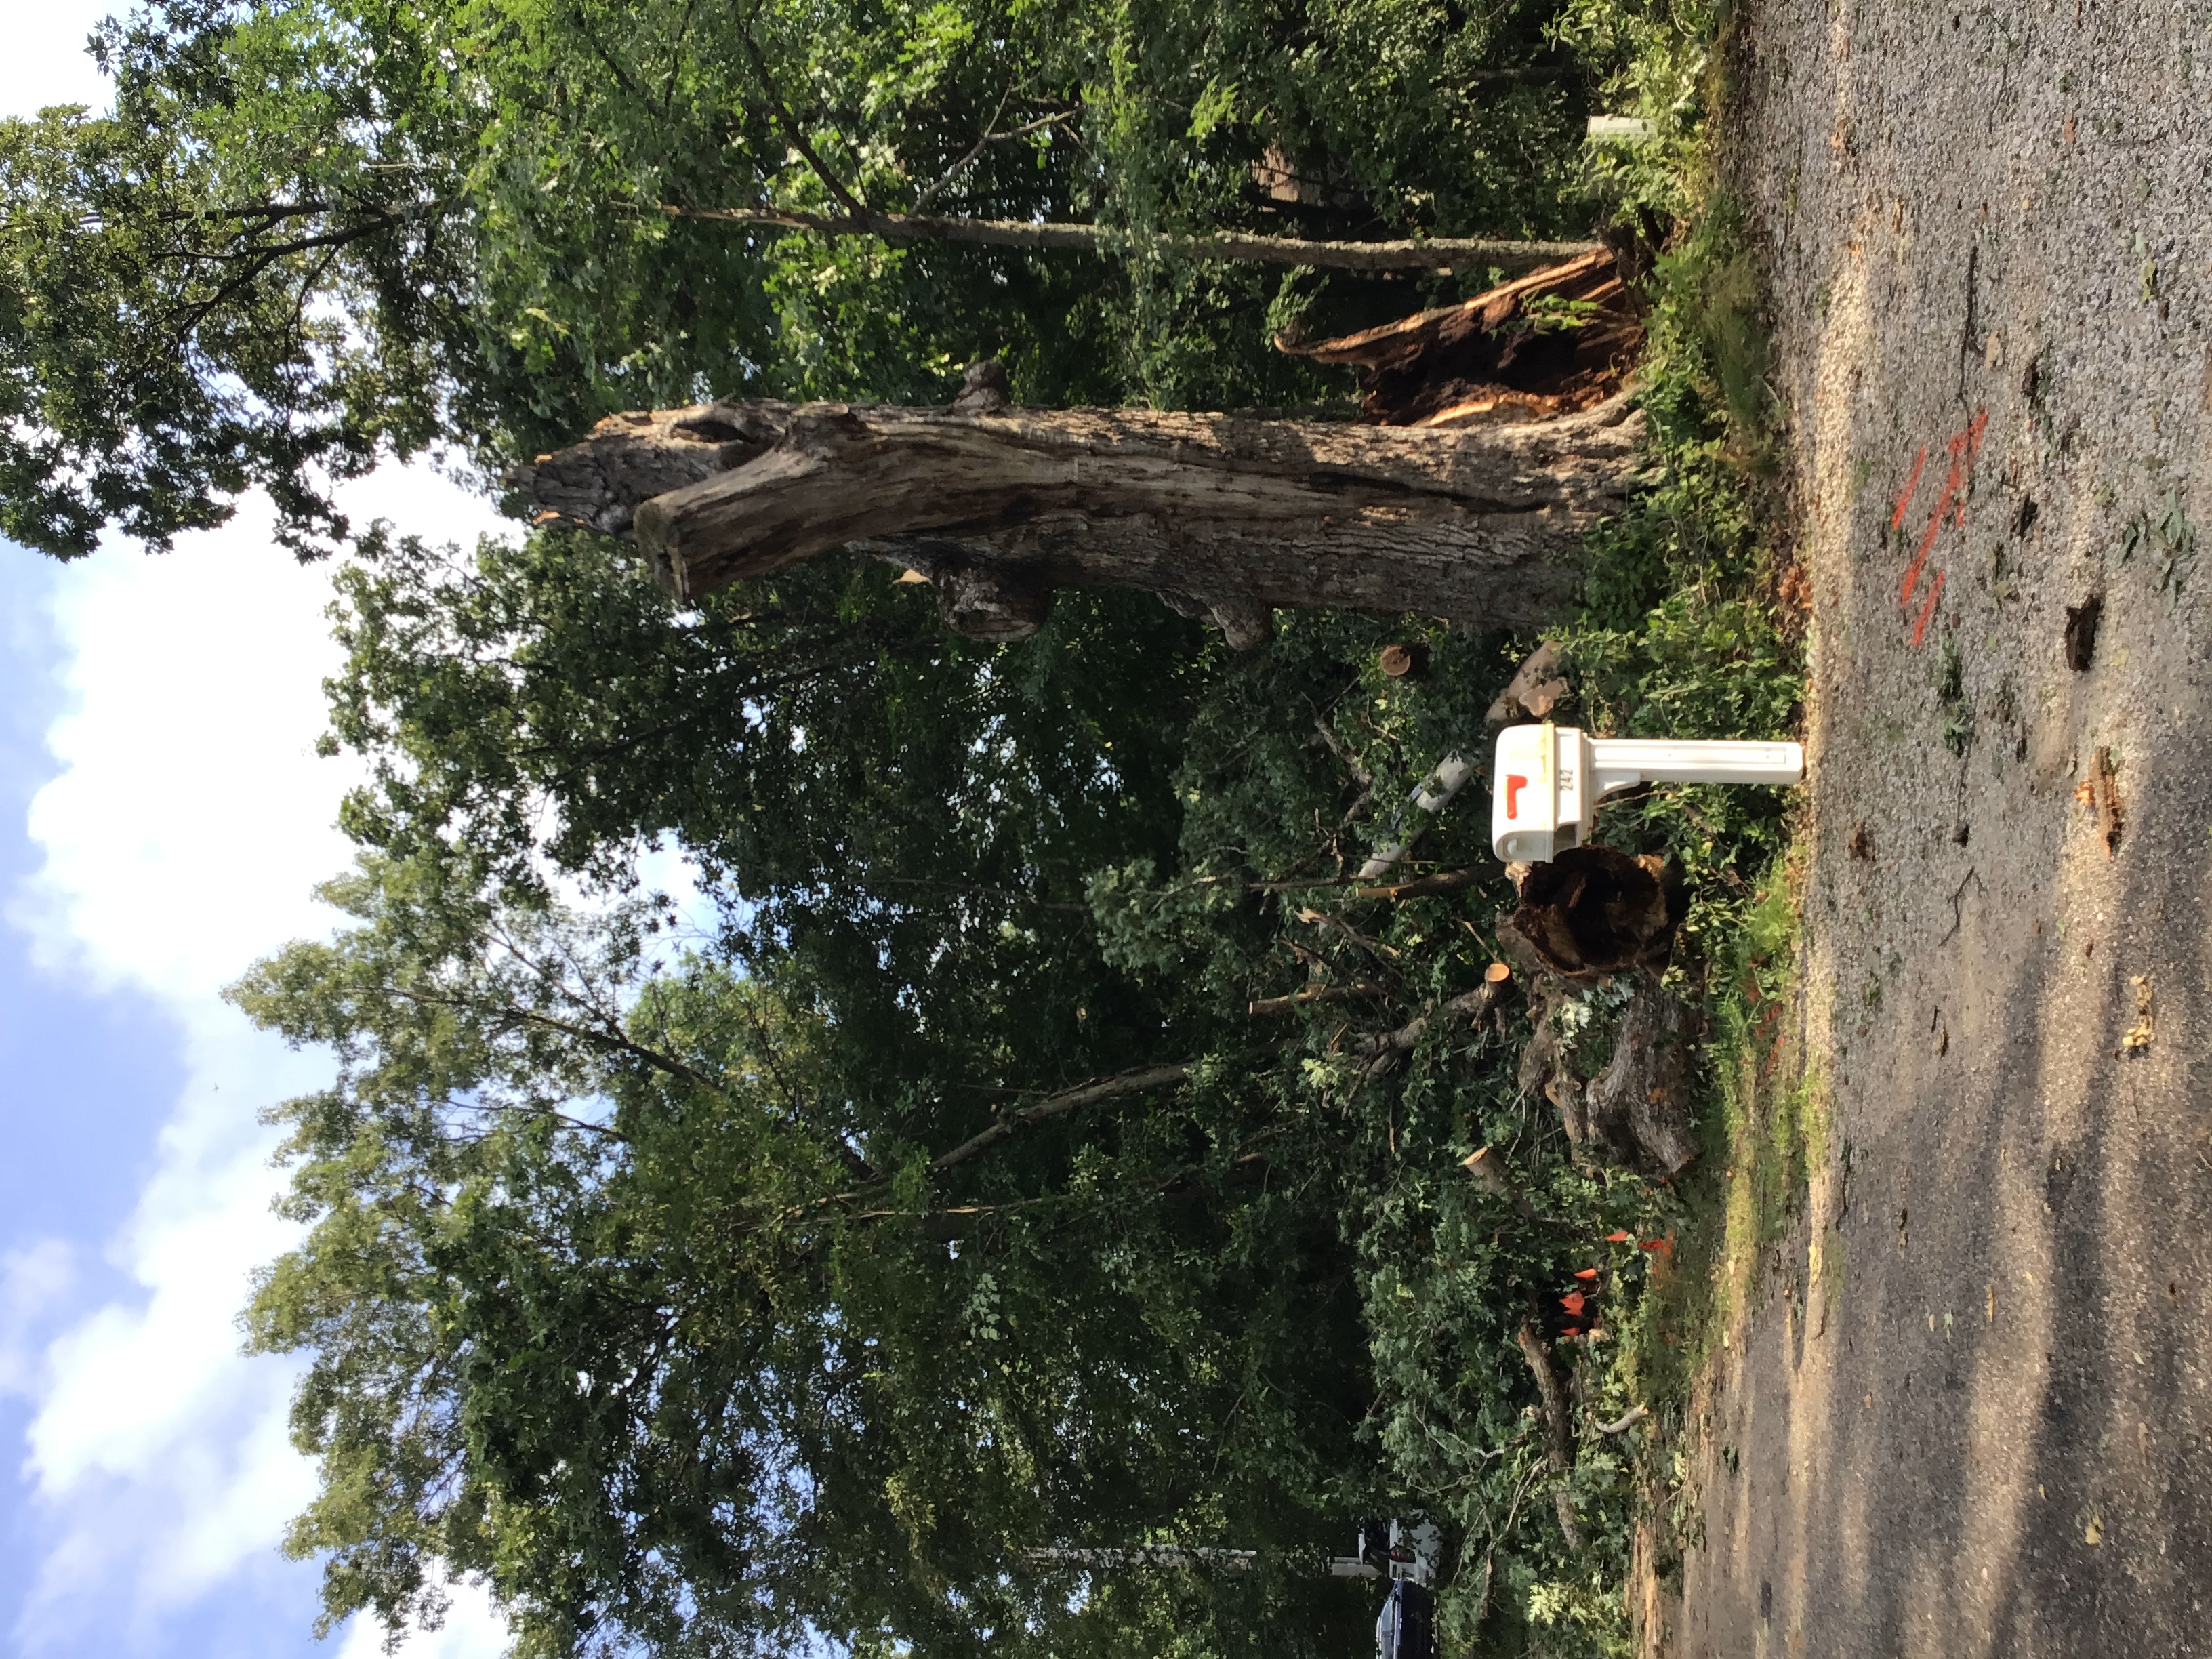 Tree snapped near Lake Wildwood